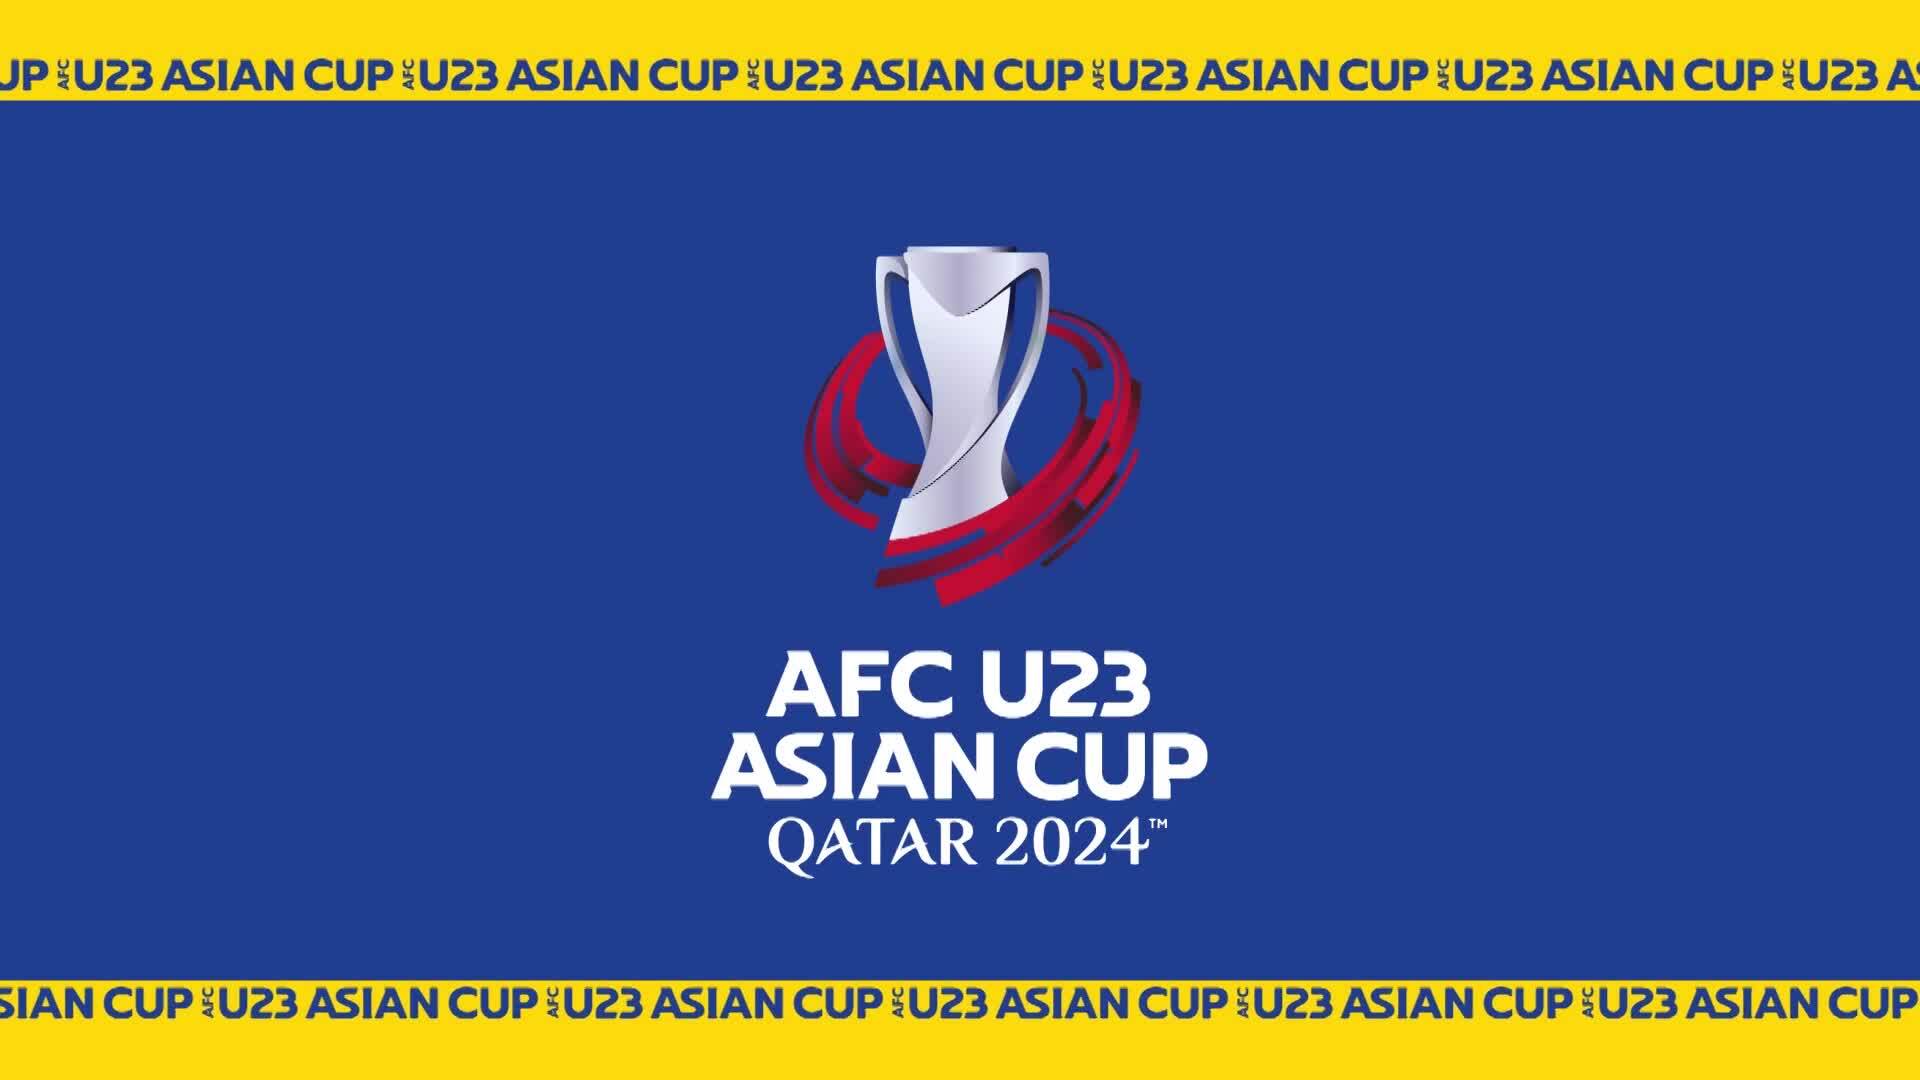 Defeating Korea, Indonesia entered the U23 Asian semi-finals